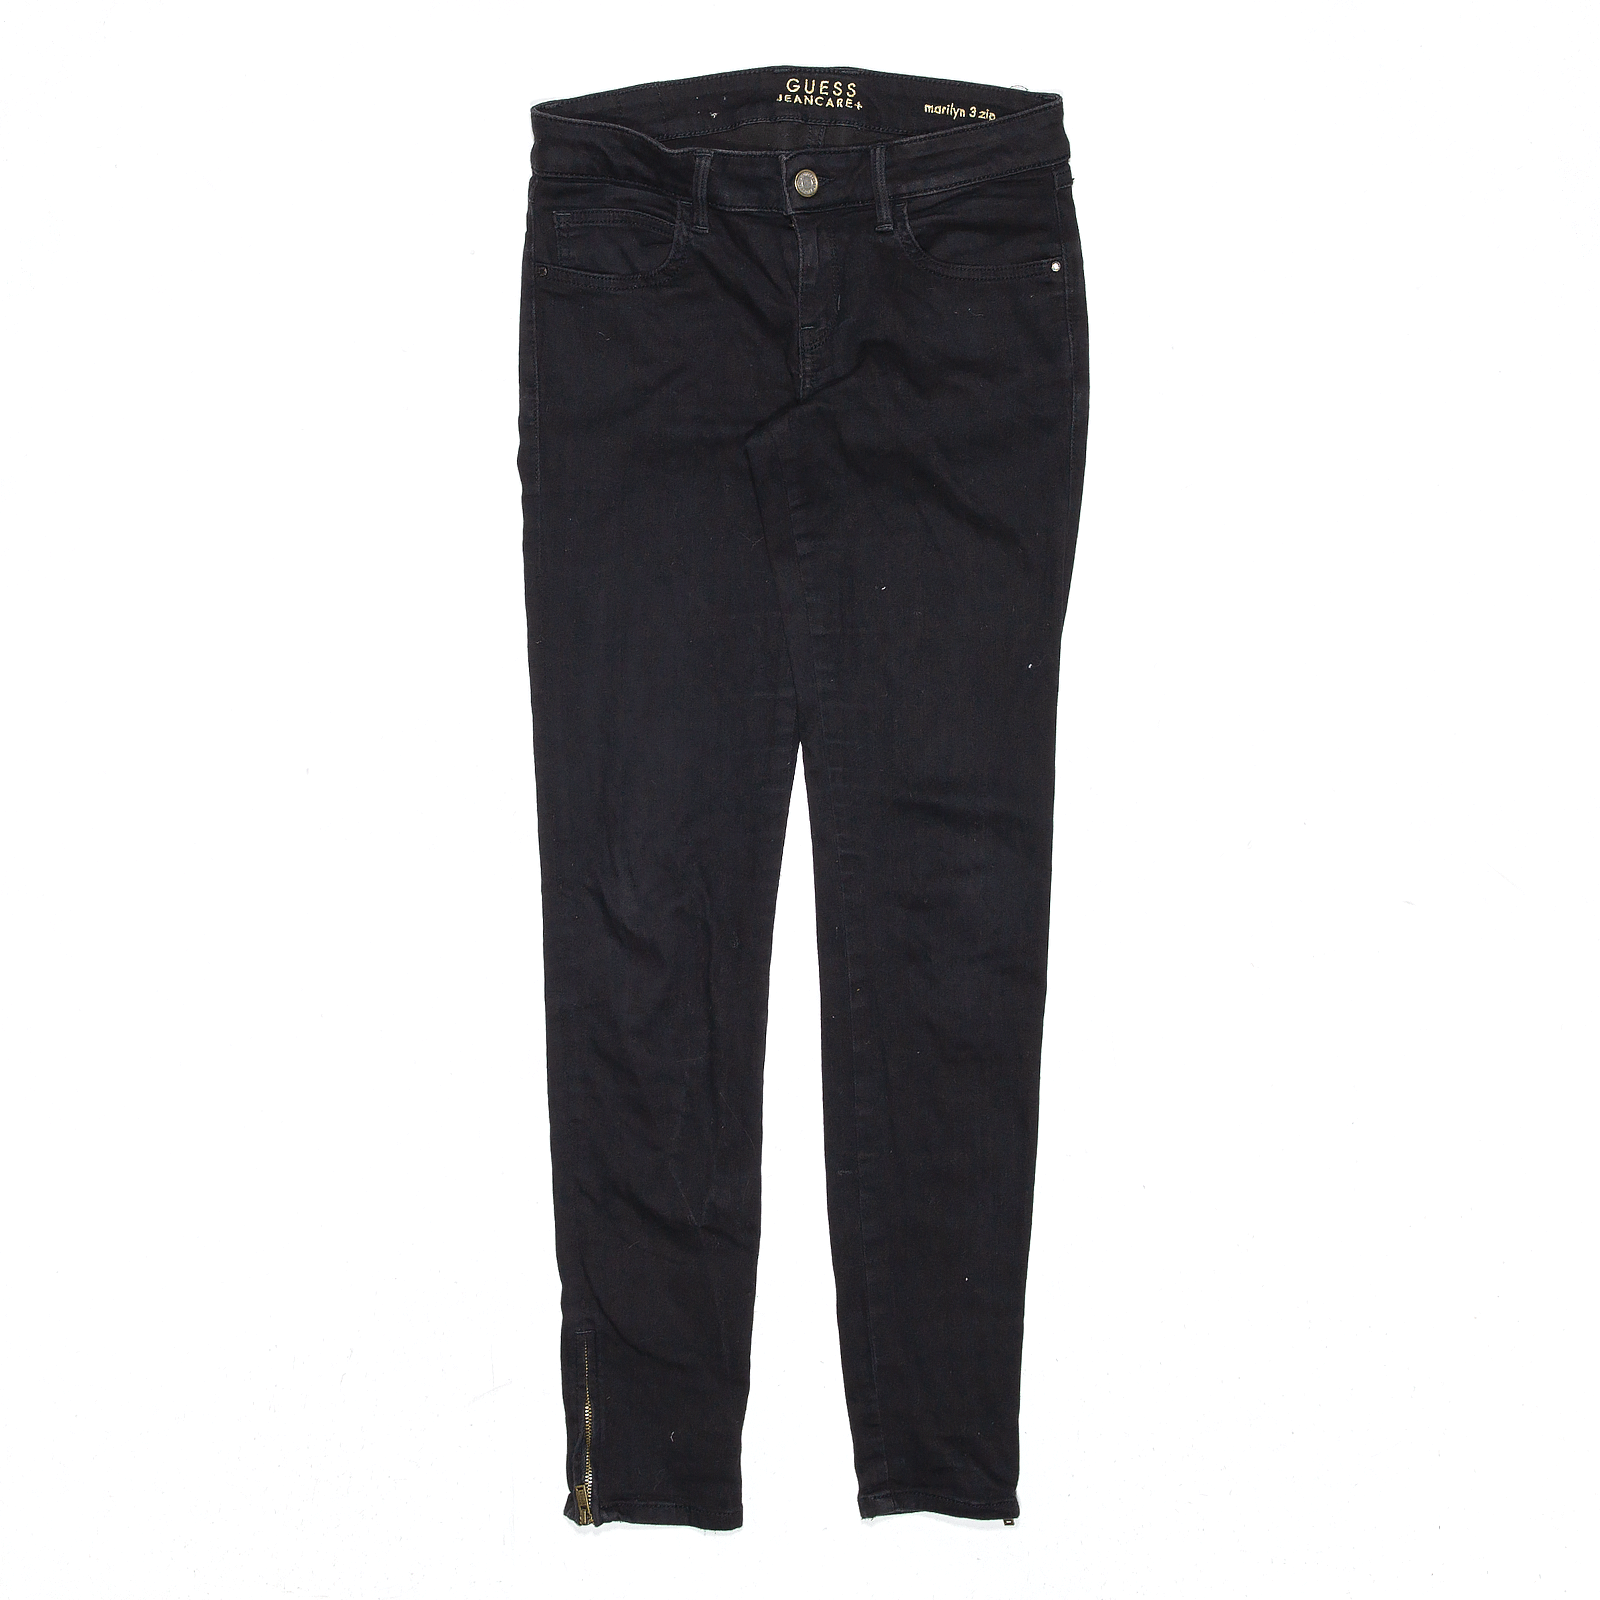 Guess Jeans Women's 26 Black Distressed Skinny Denim Pants Stretch Size  30x28 | eBay